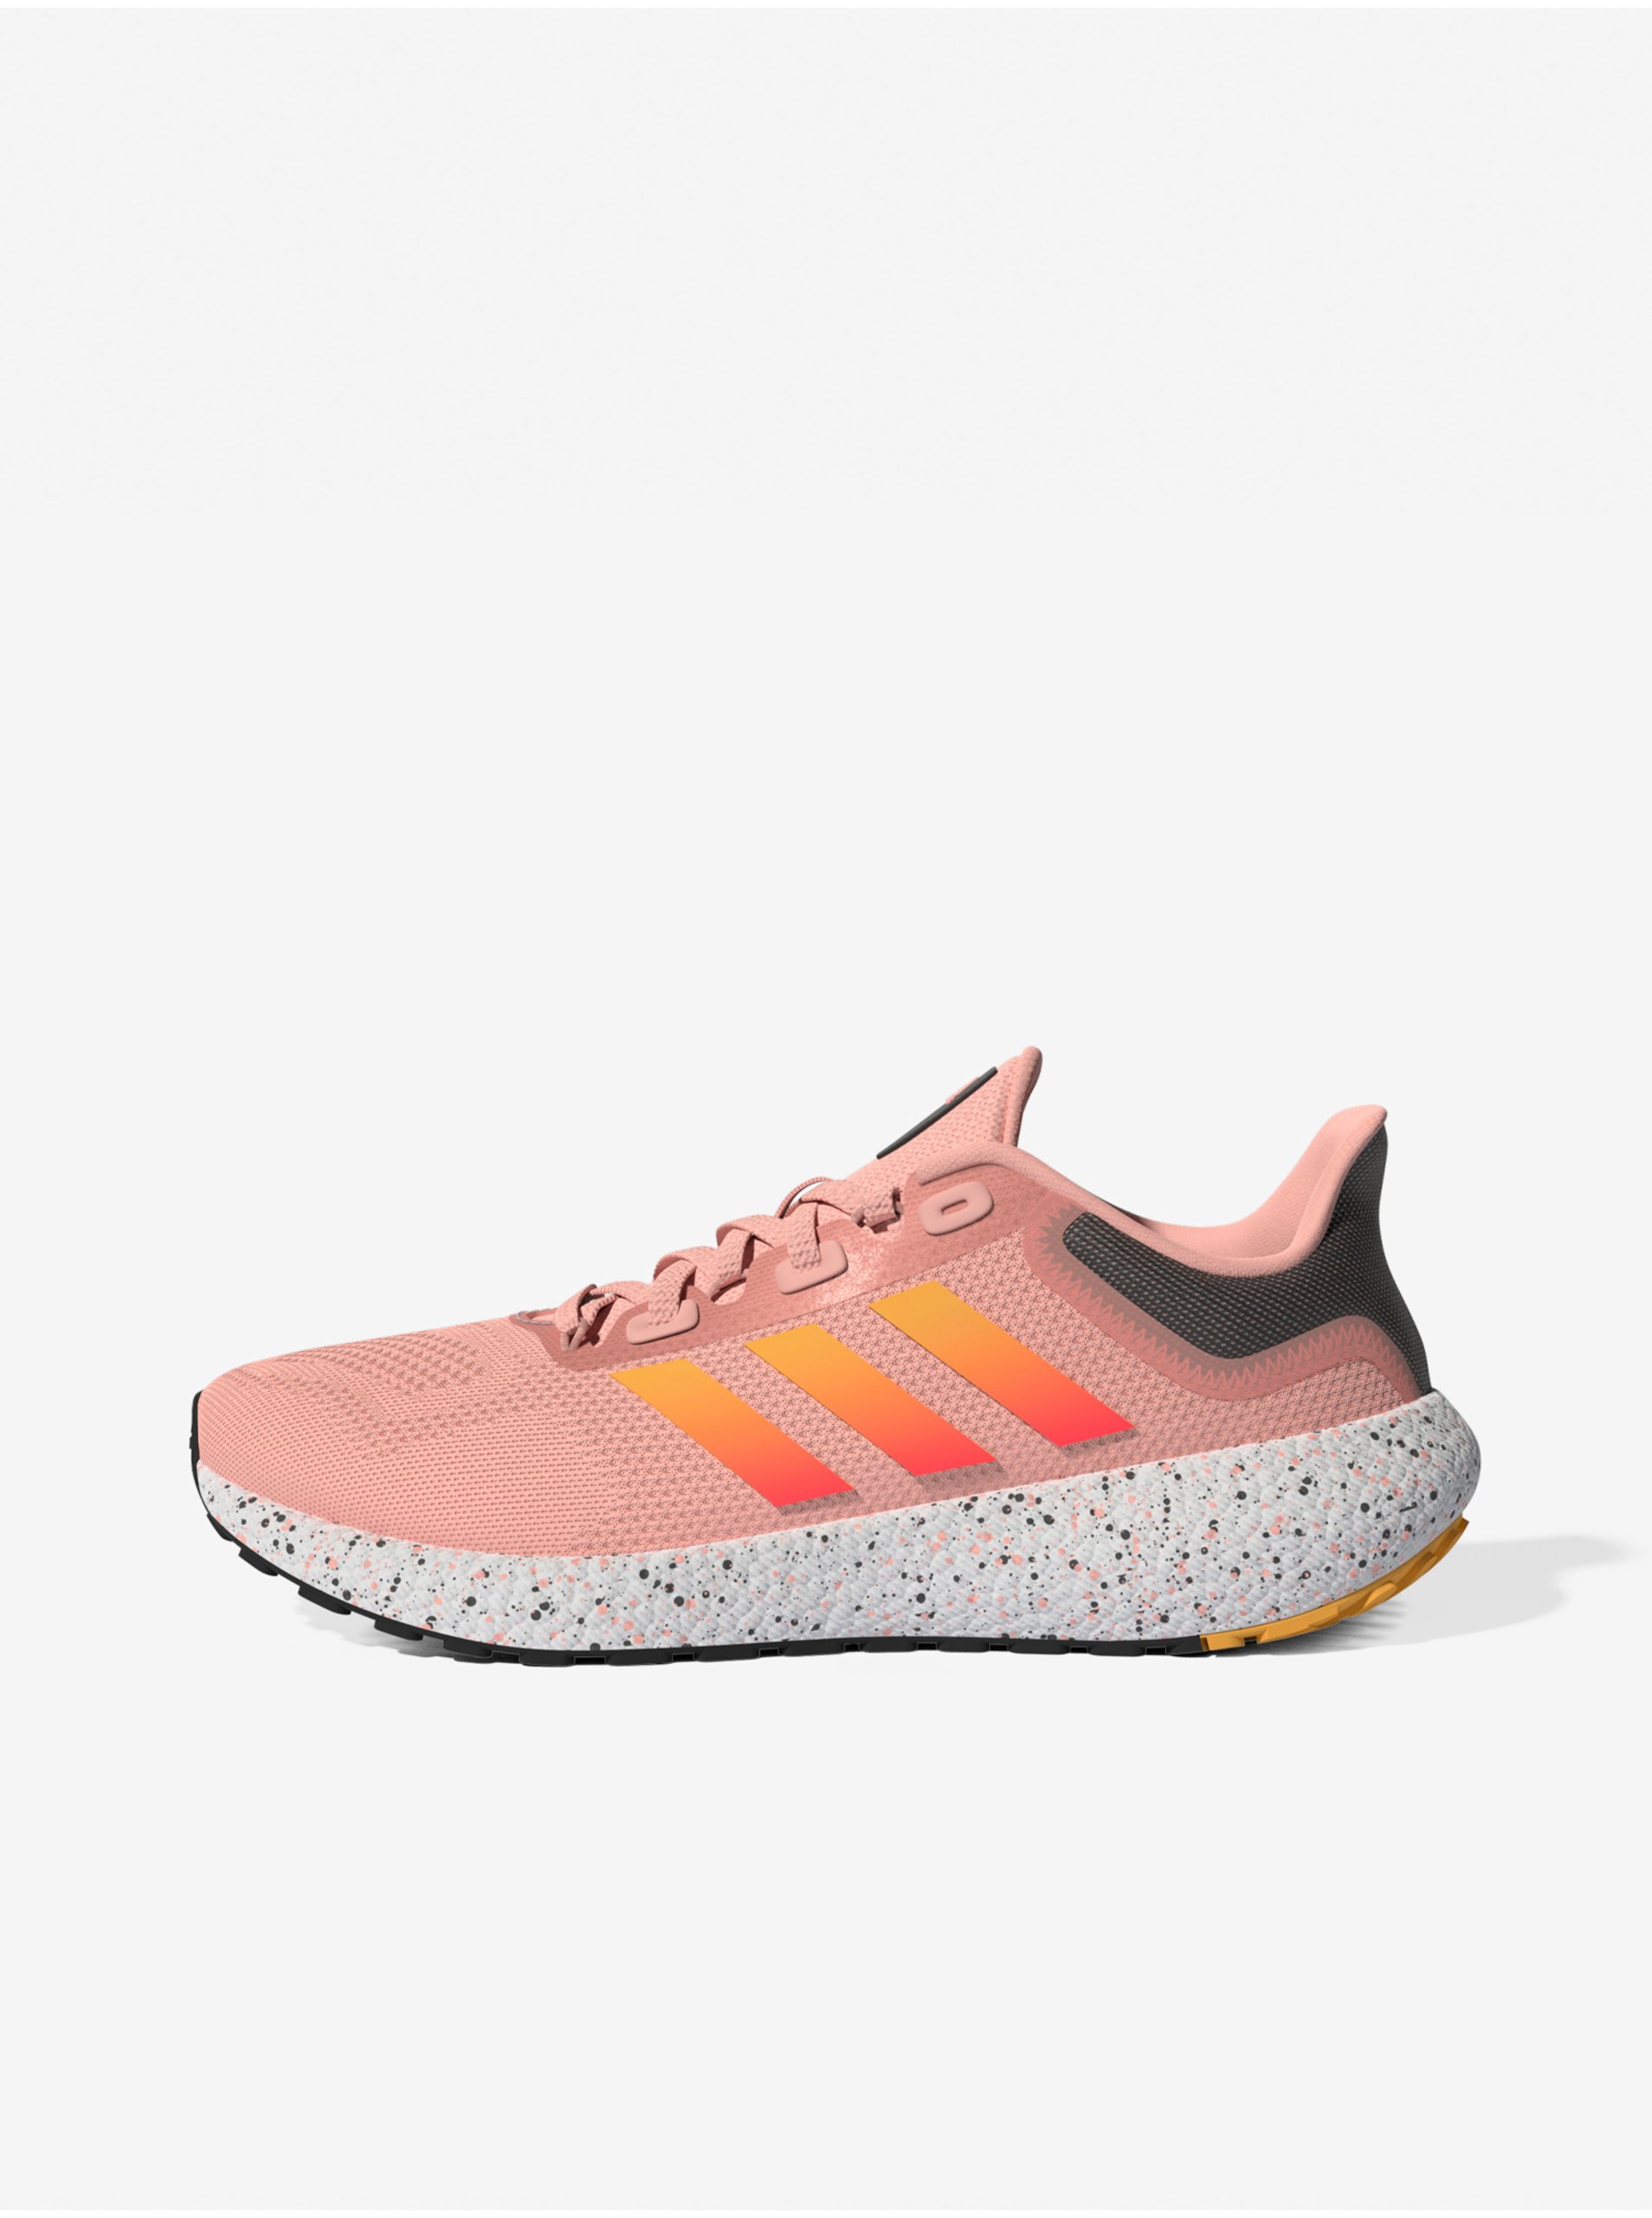 Adidas Performance Pureboost Jet Pink Γυναικεία Παπούτσια για Τρέξιμο - Γυναικεία